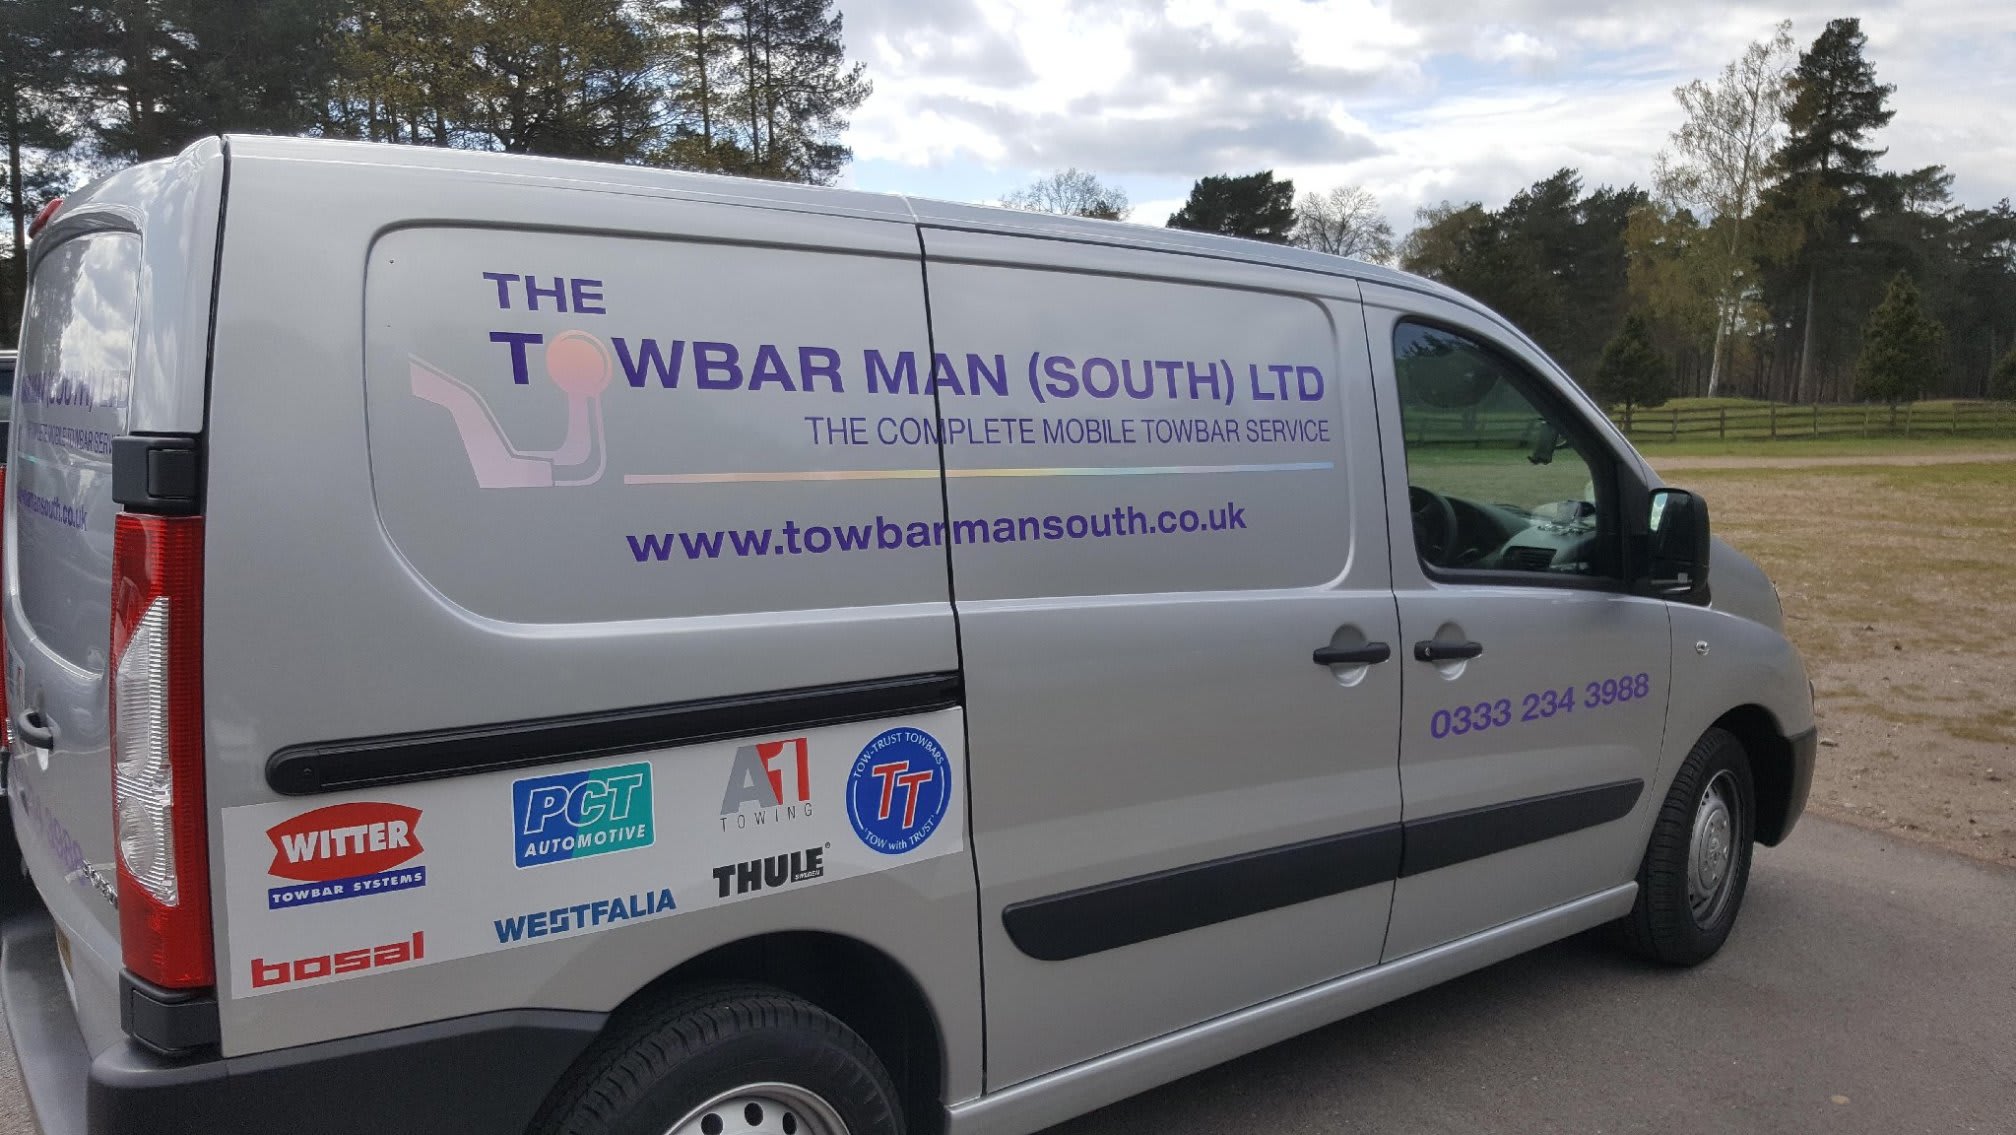 Images The Towbar Man (South) Ltd